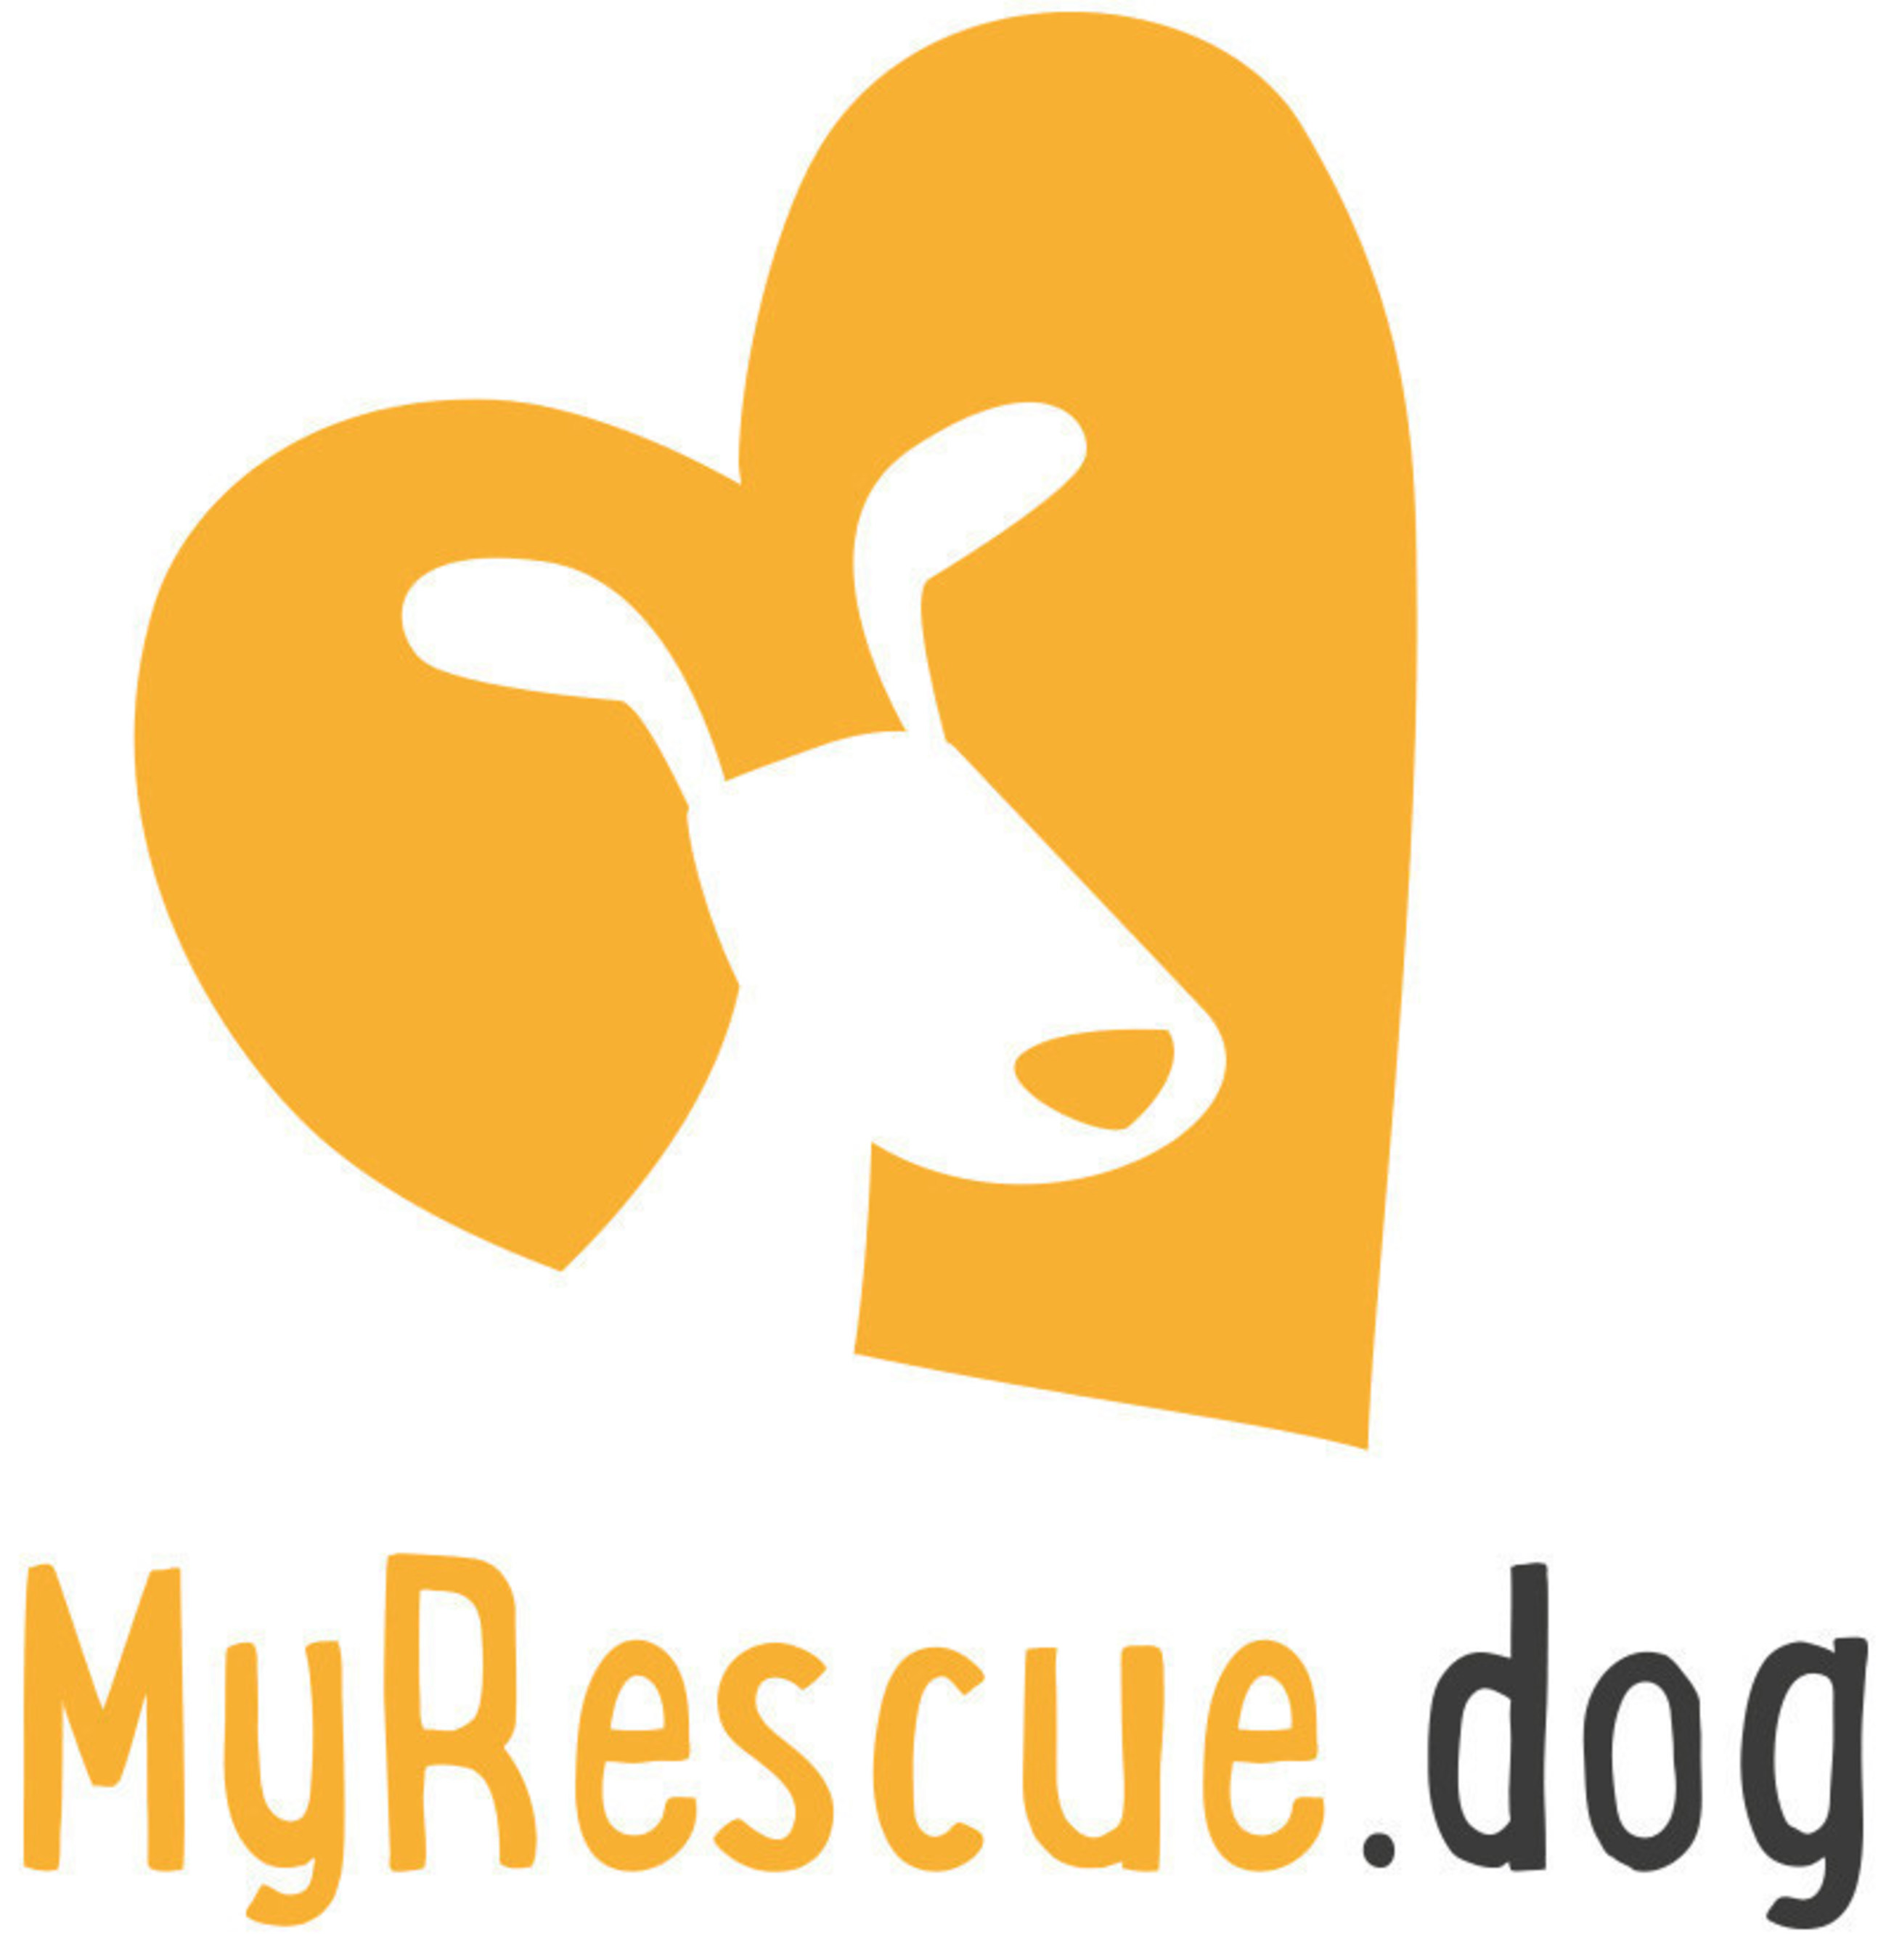 MyRescue.dog logo